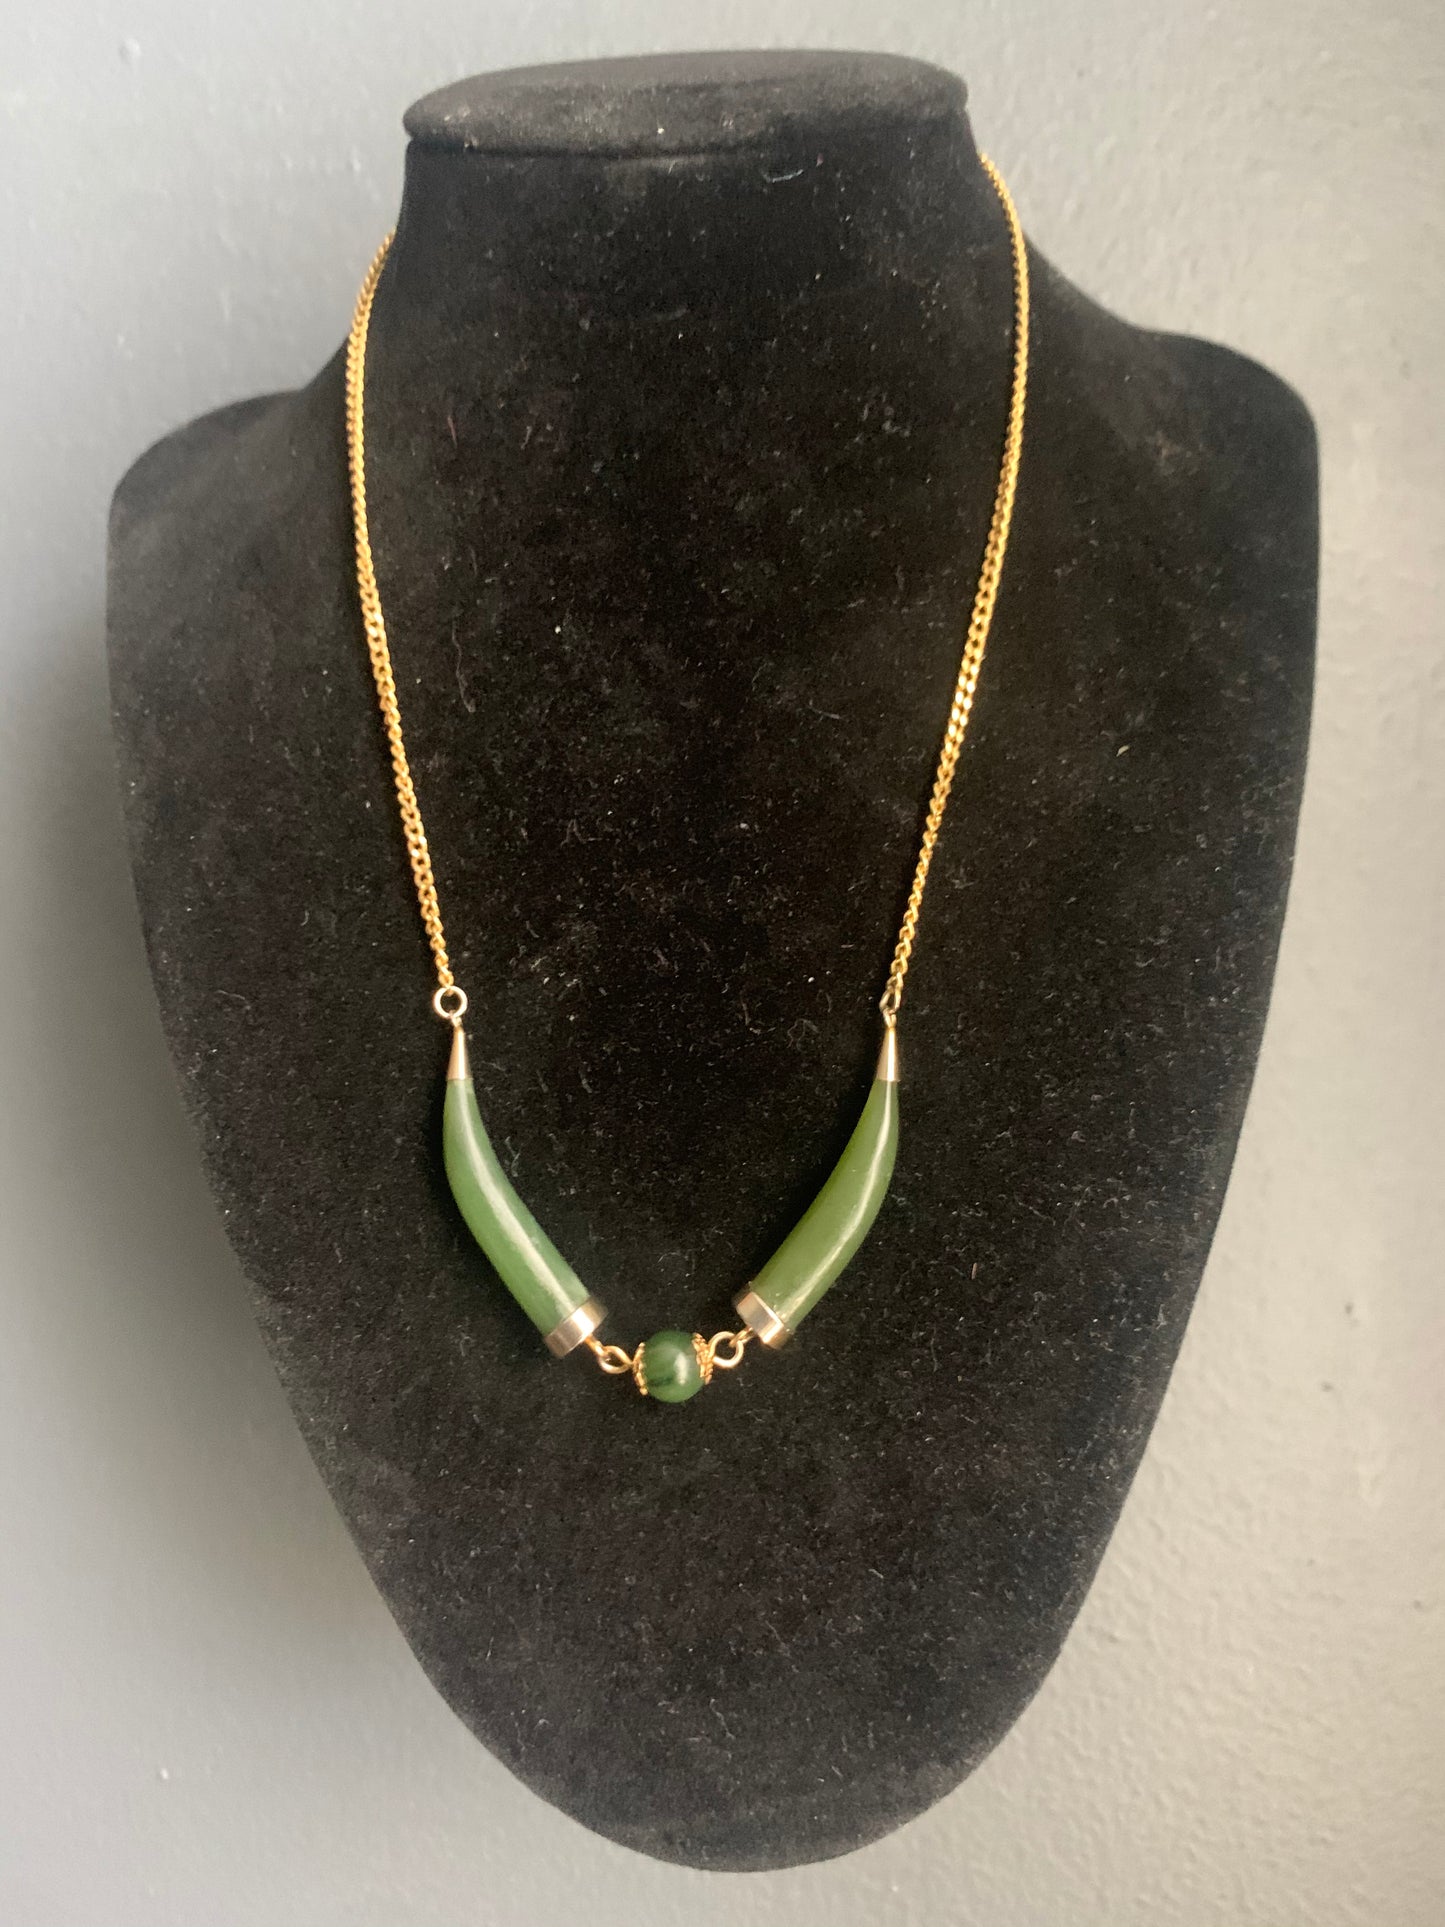 A nephrite jade necklace